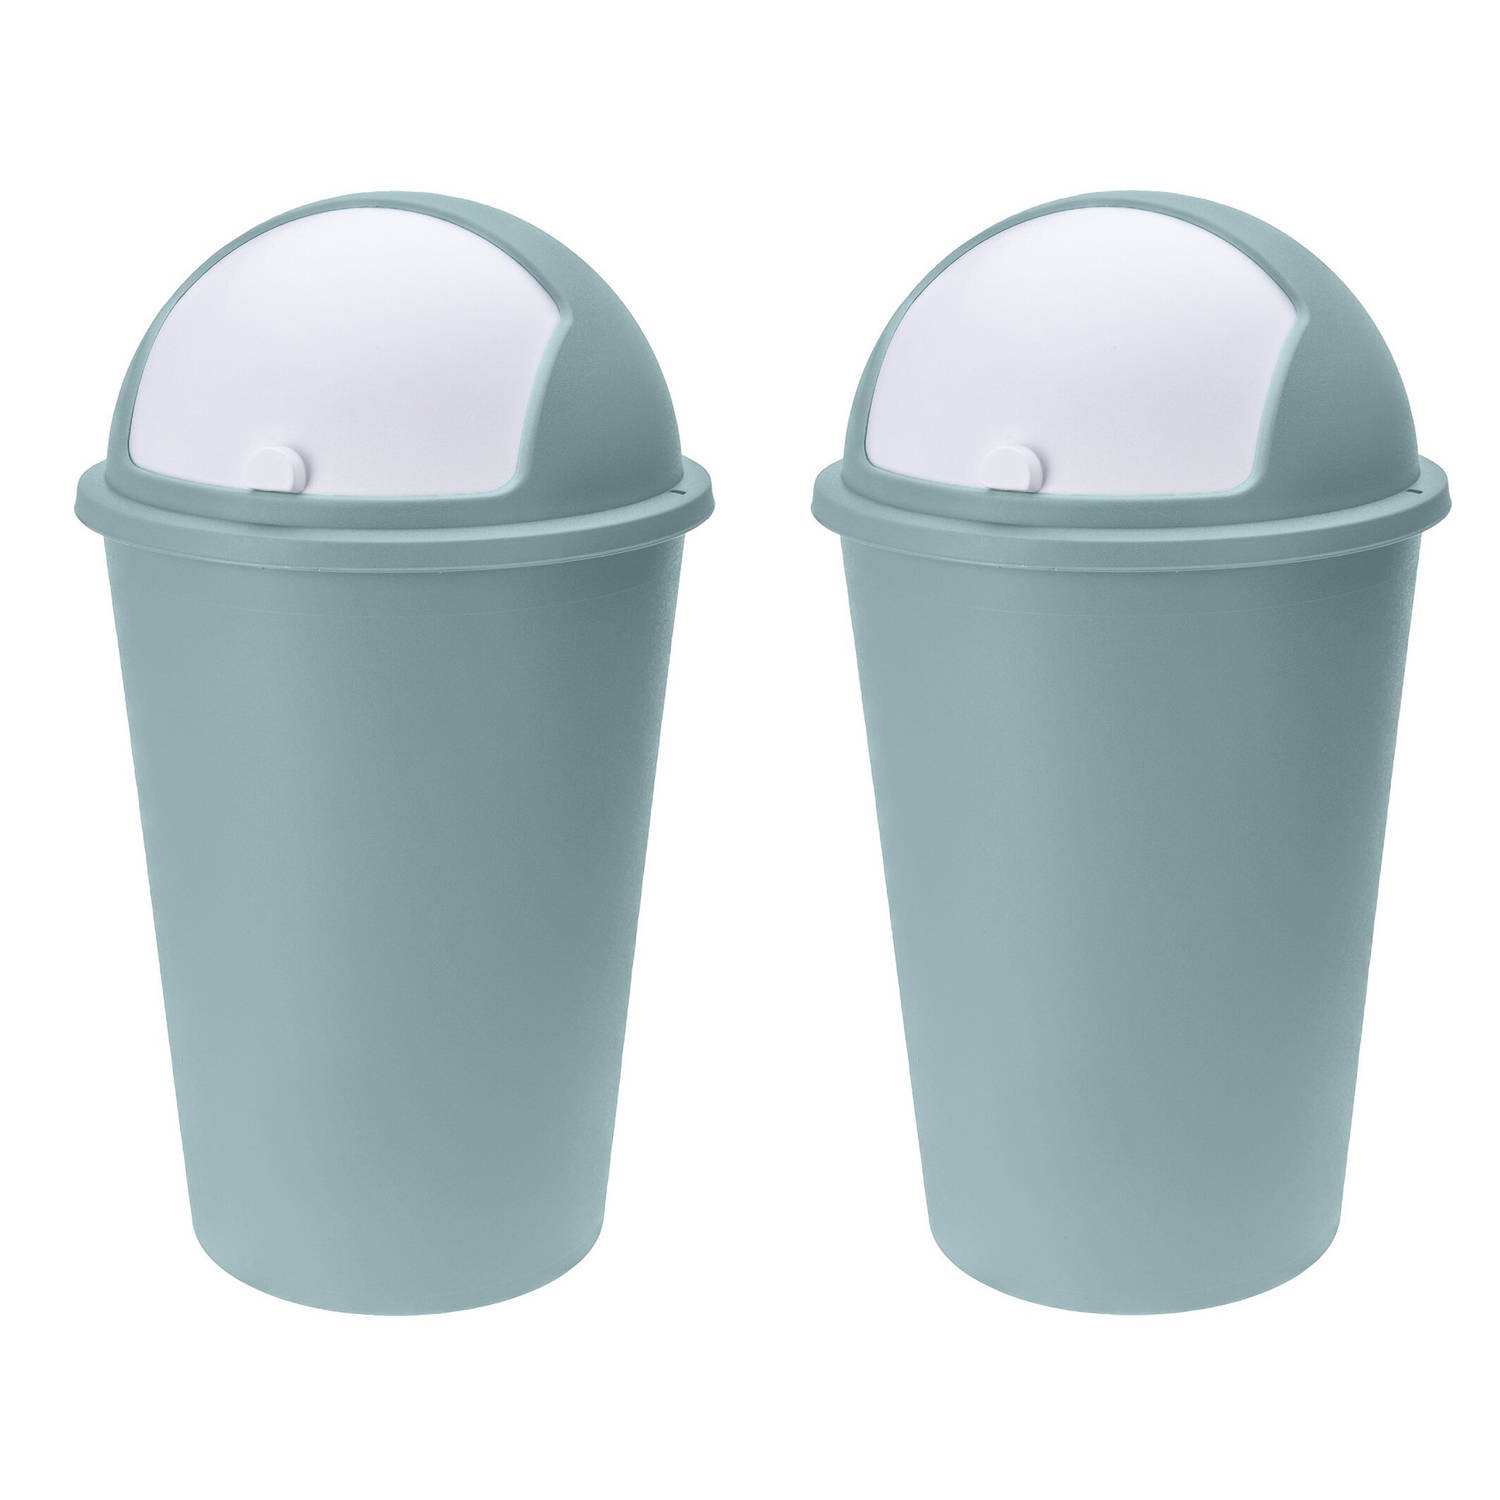 2x stuks vuilnisbak-afvalbak-prullenbak groen met deksel 50 liter Prullenbakken